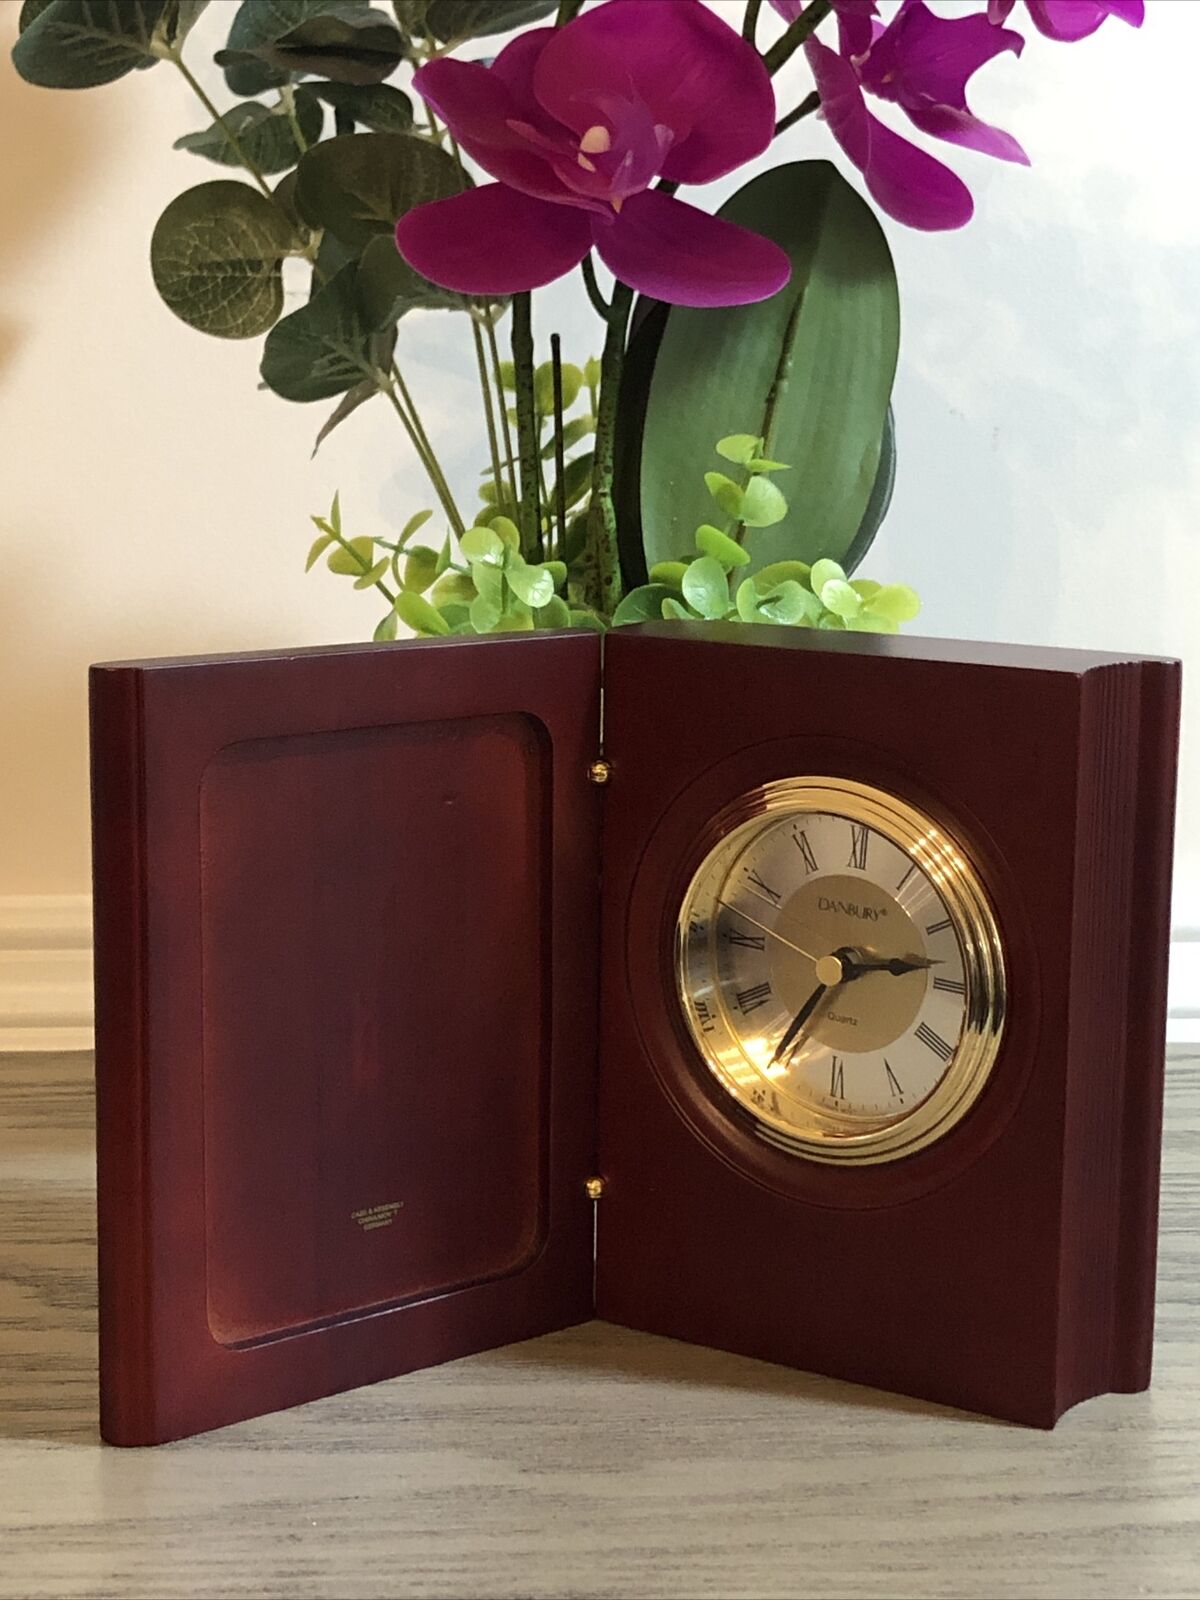 Danbury Desk Clock Company Quartz Mantel Clock with German Movement Battery